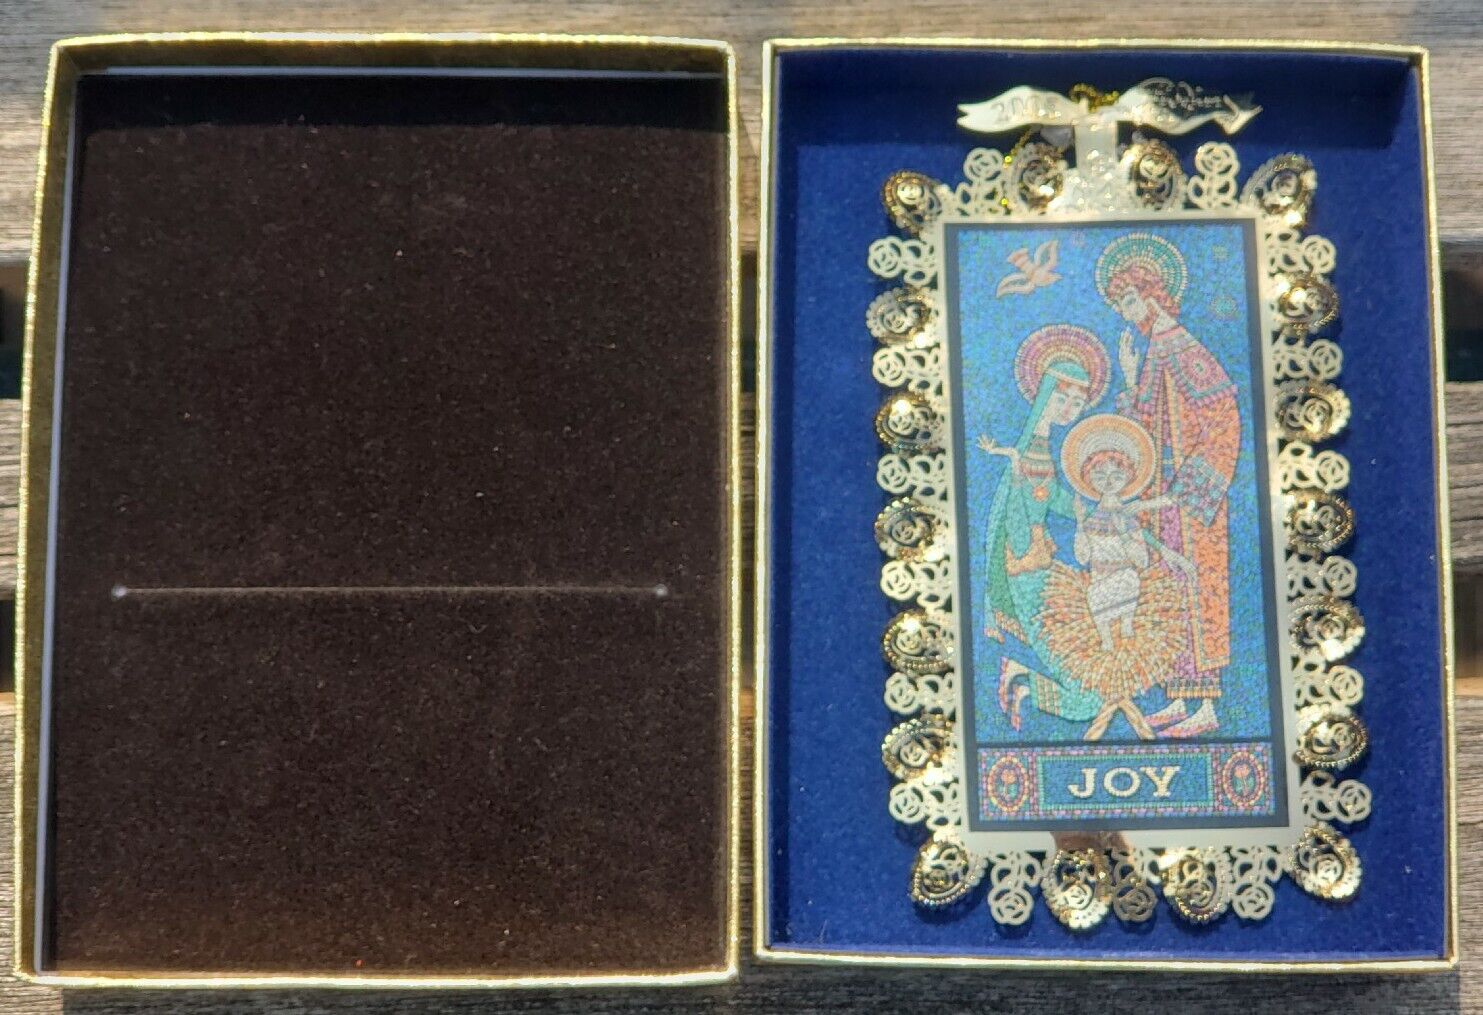 Rolan Johnson - Joy - 2005 Christmas Ornament Limited w/Box